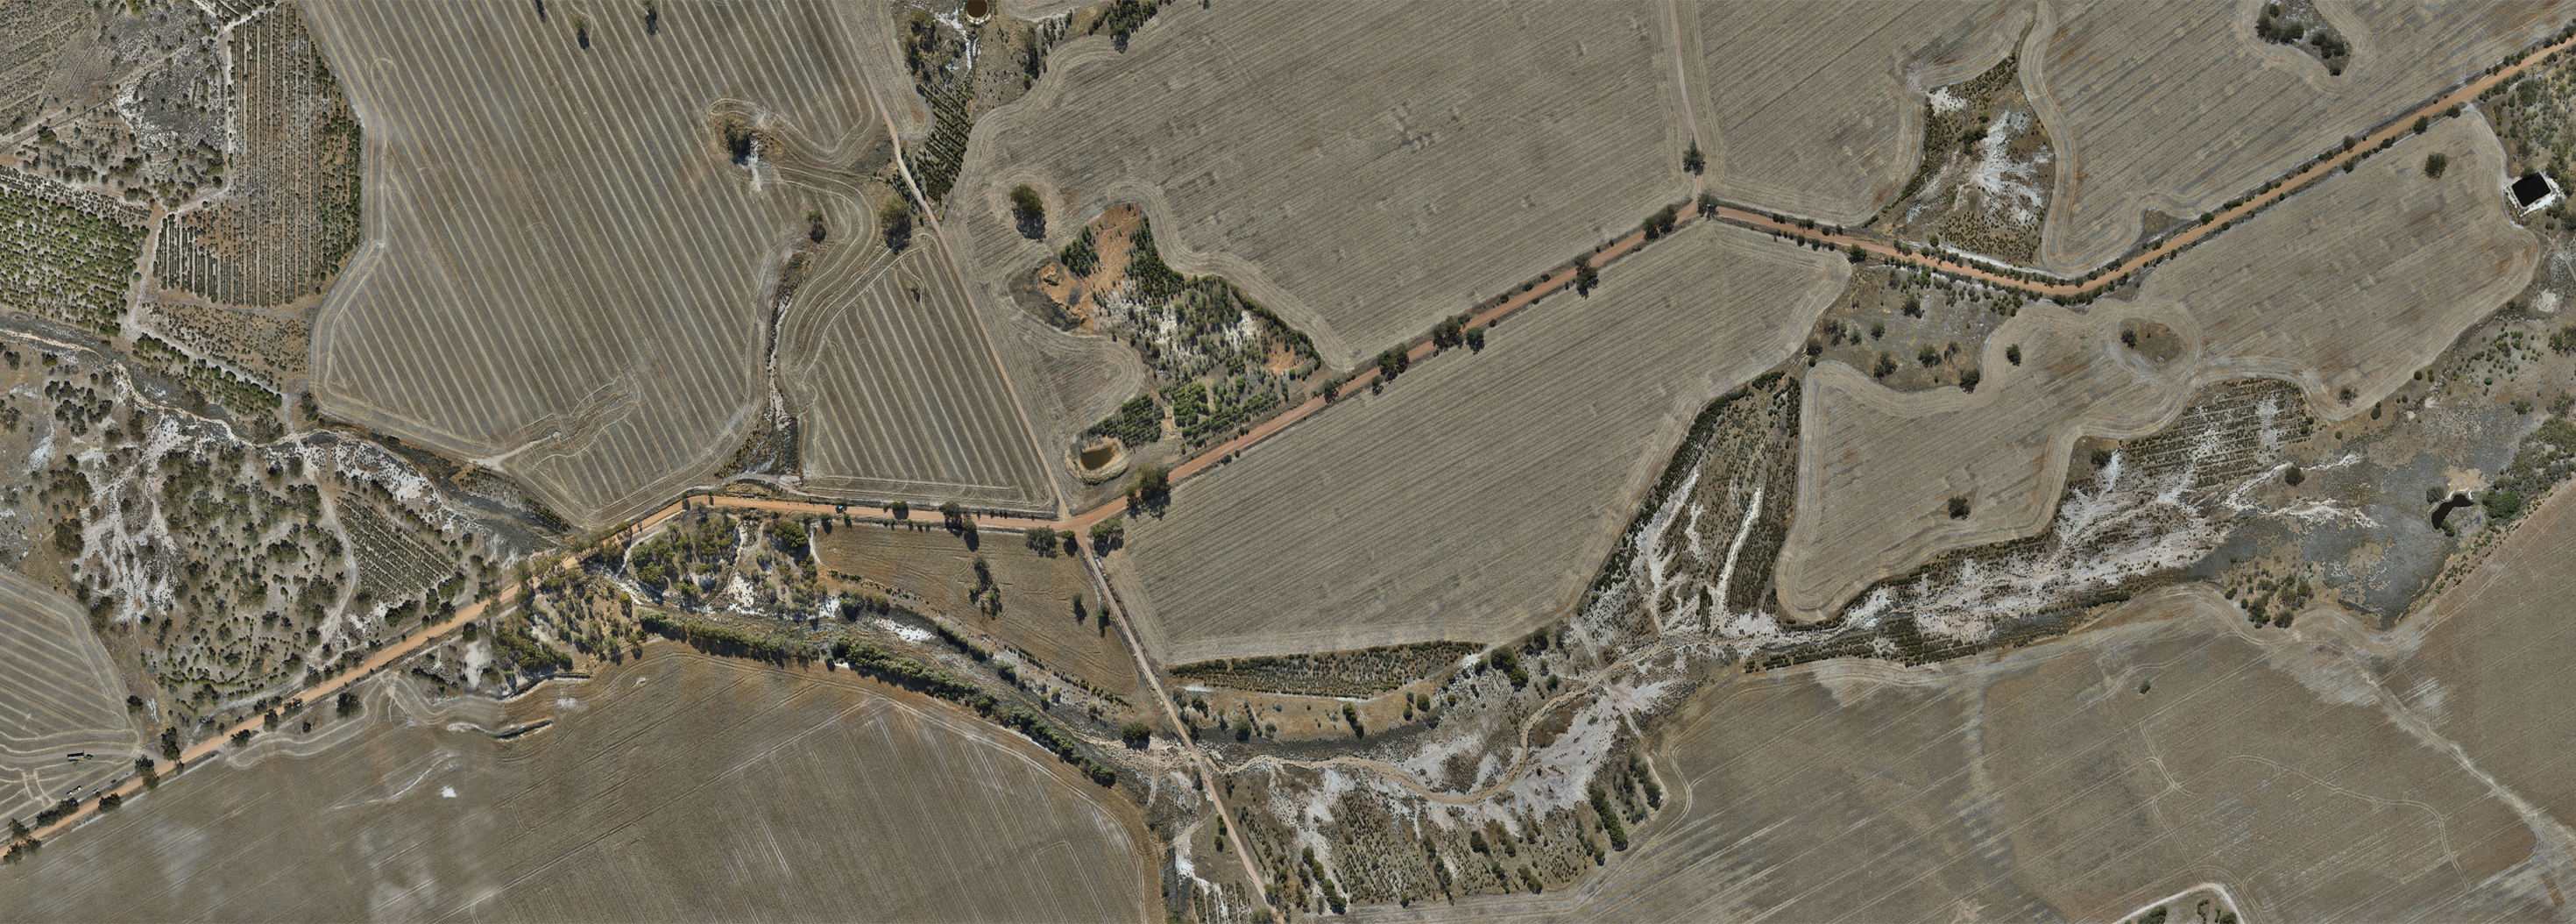 Aerial orthophoto of farmland taken by Sensorem drone technology.